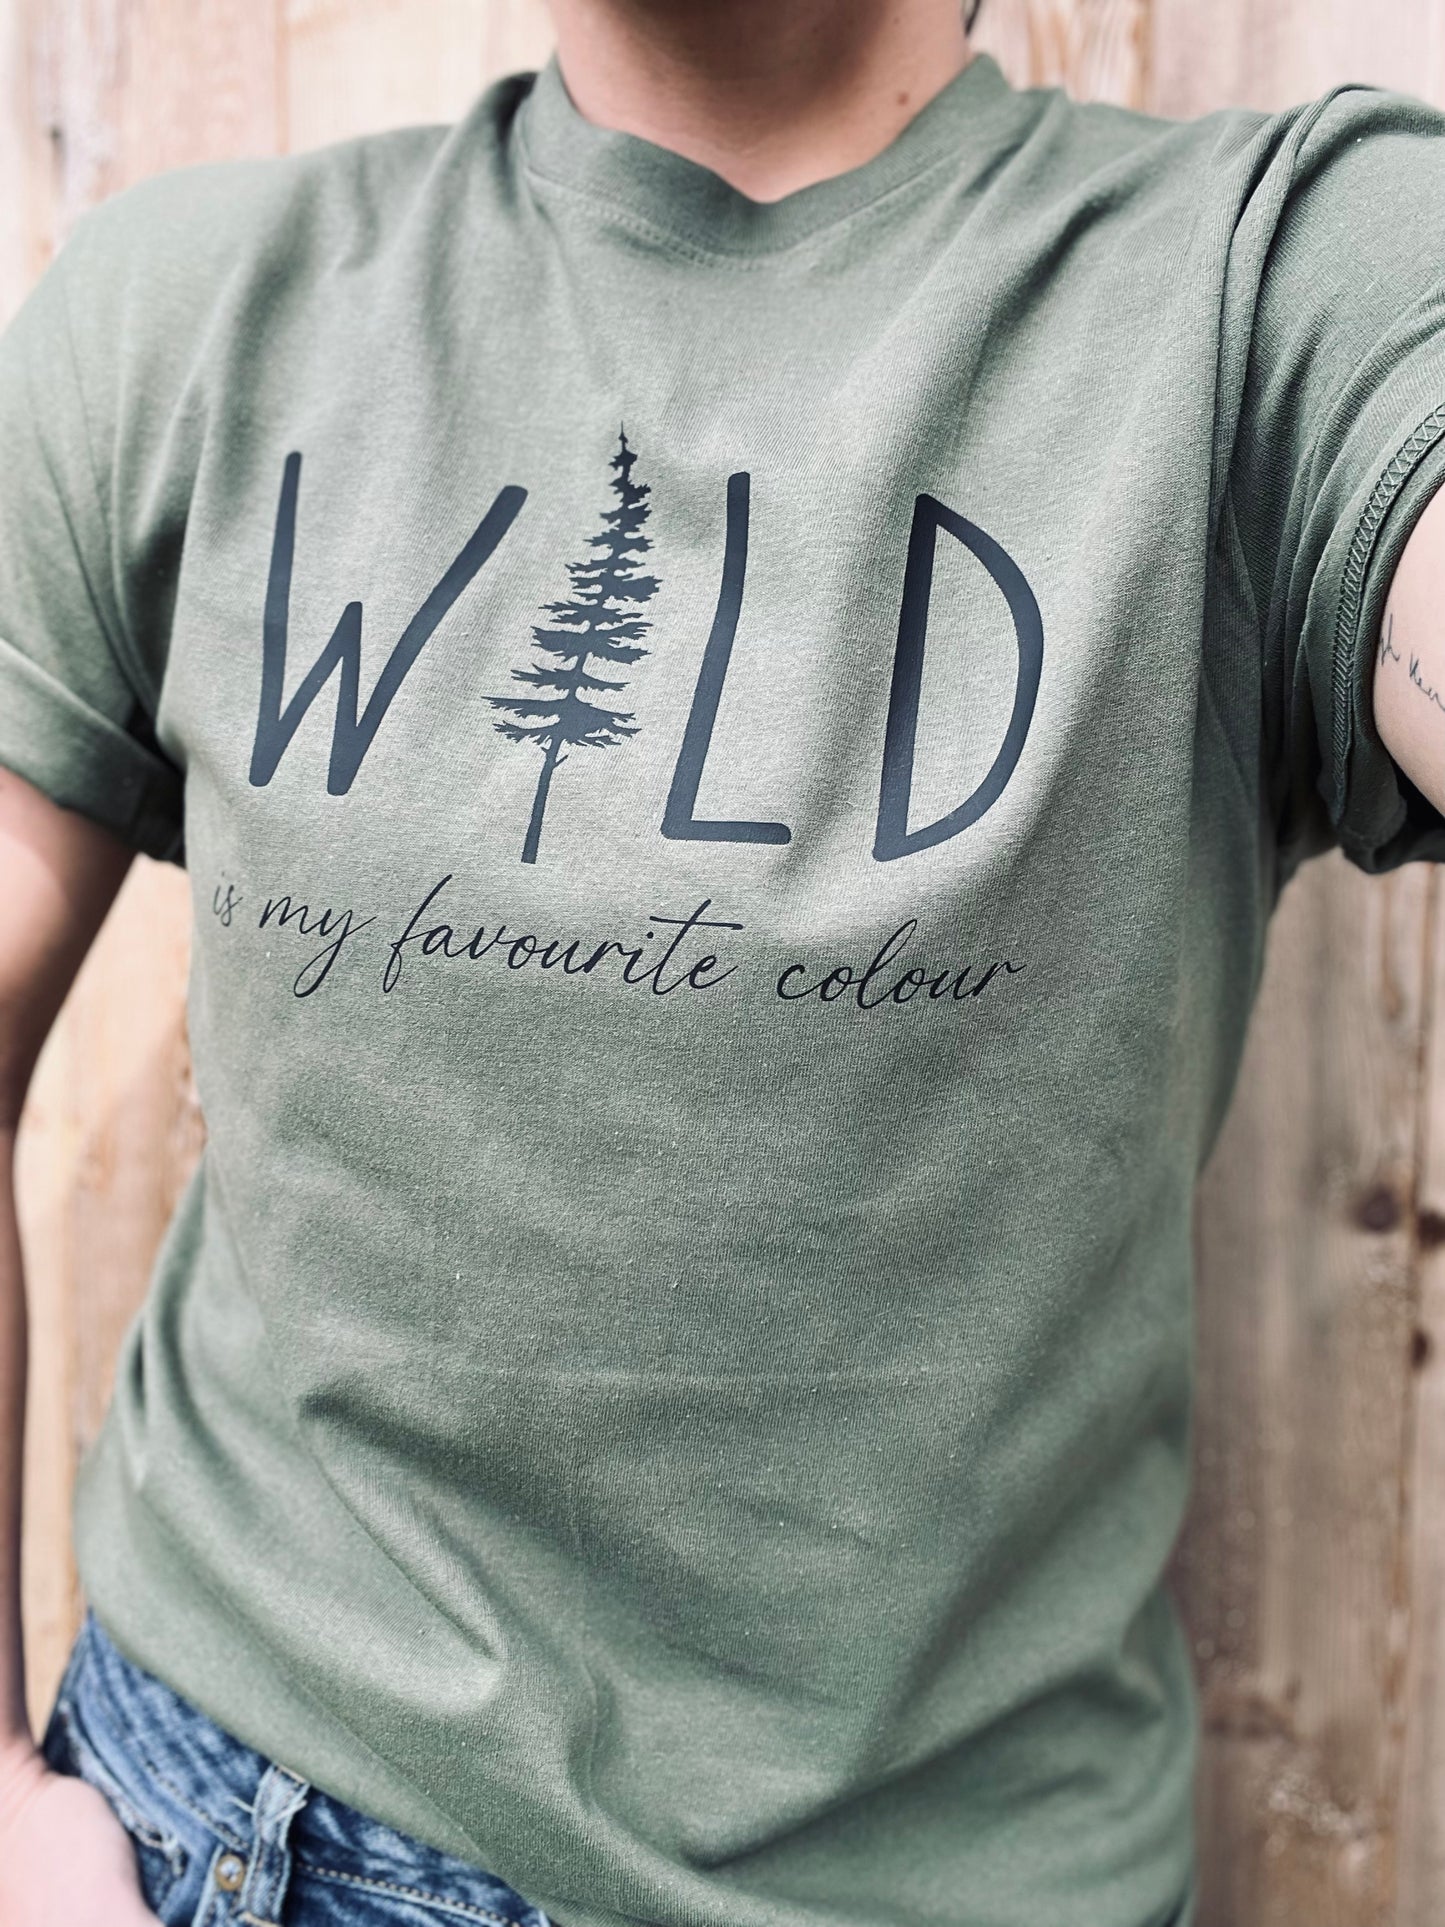 WILD T-shirt